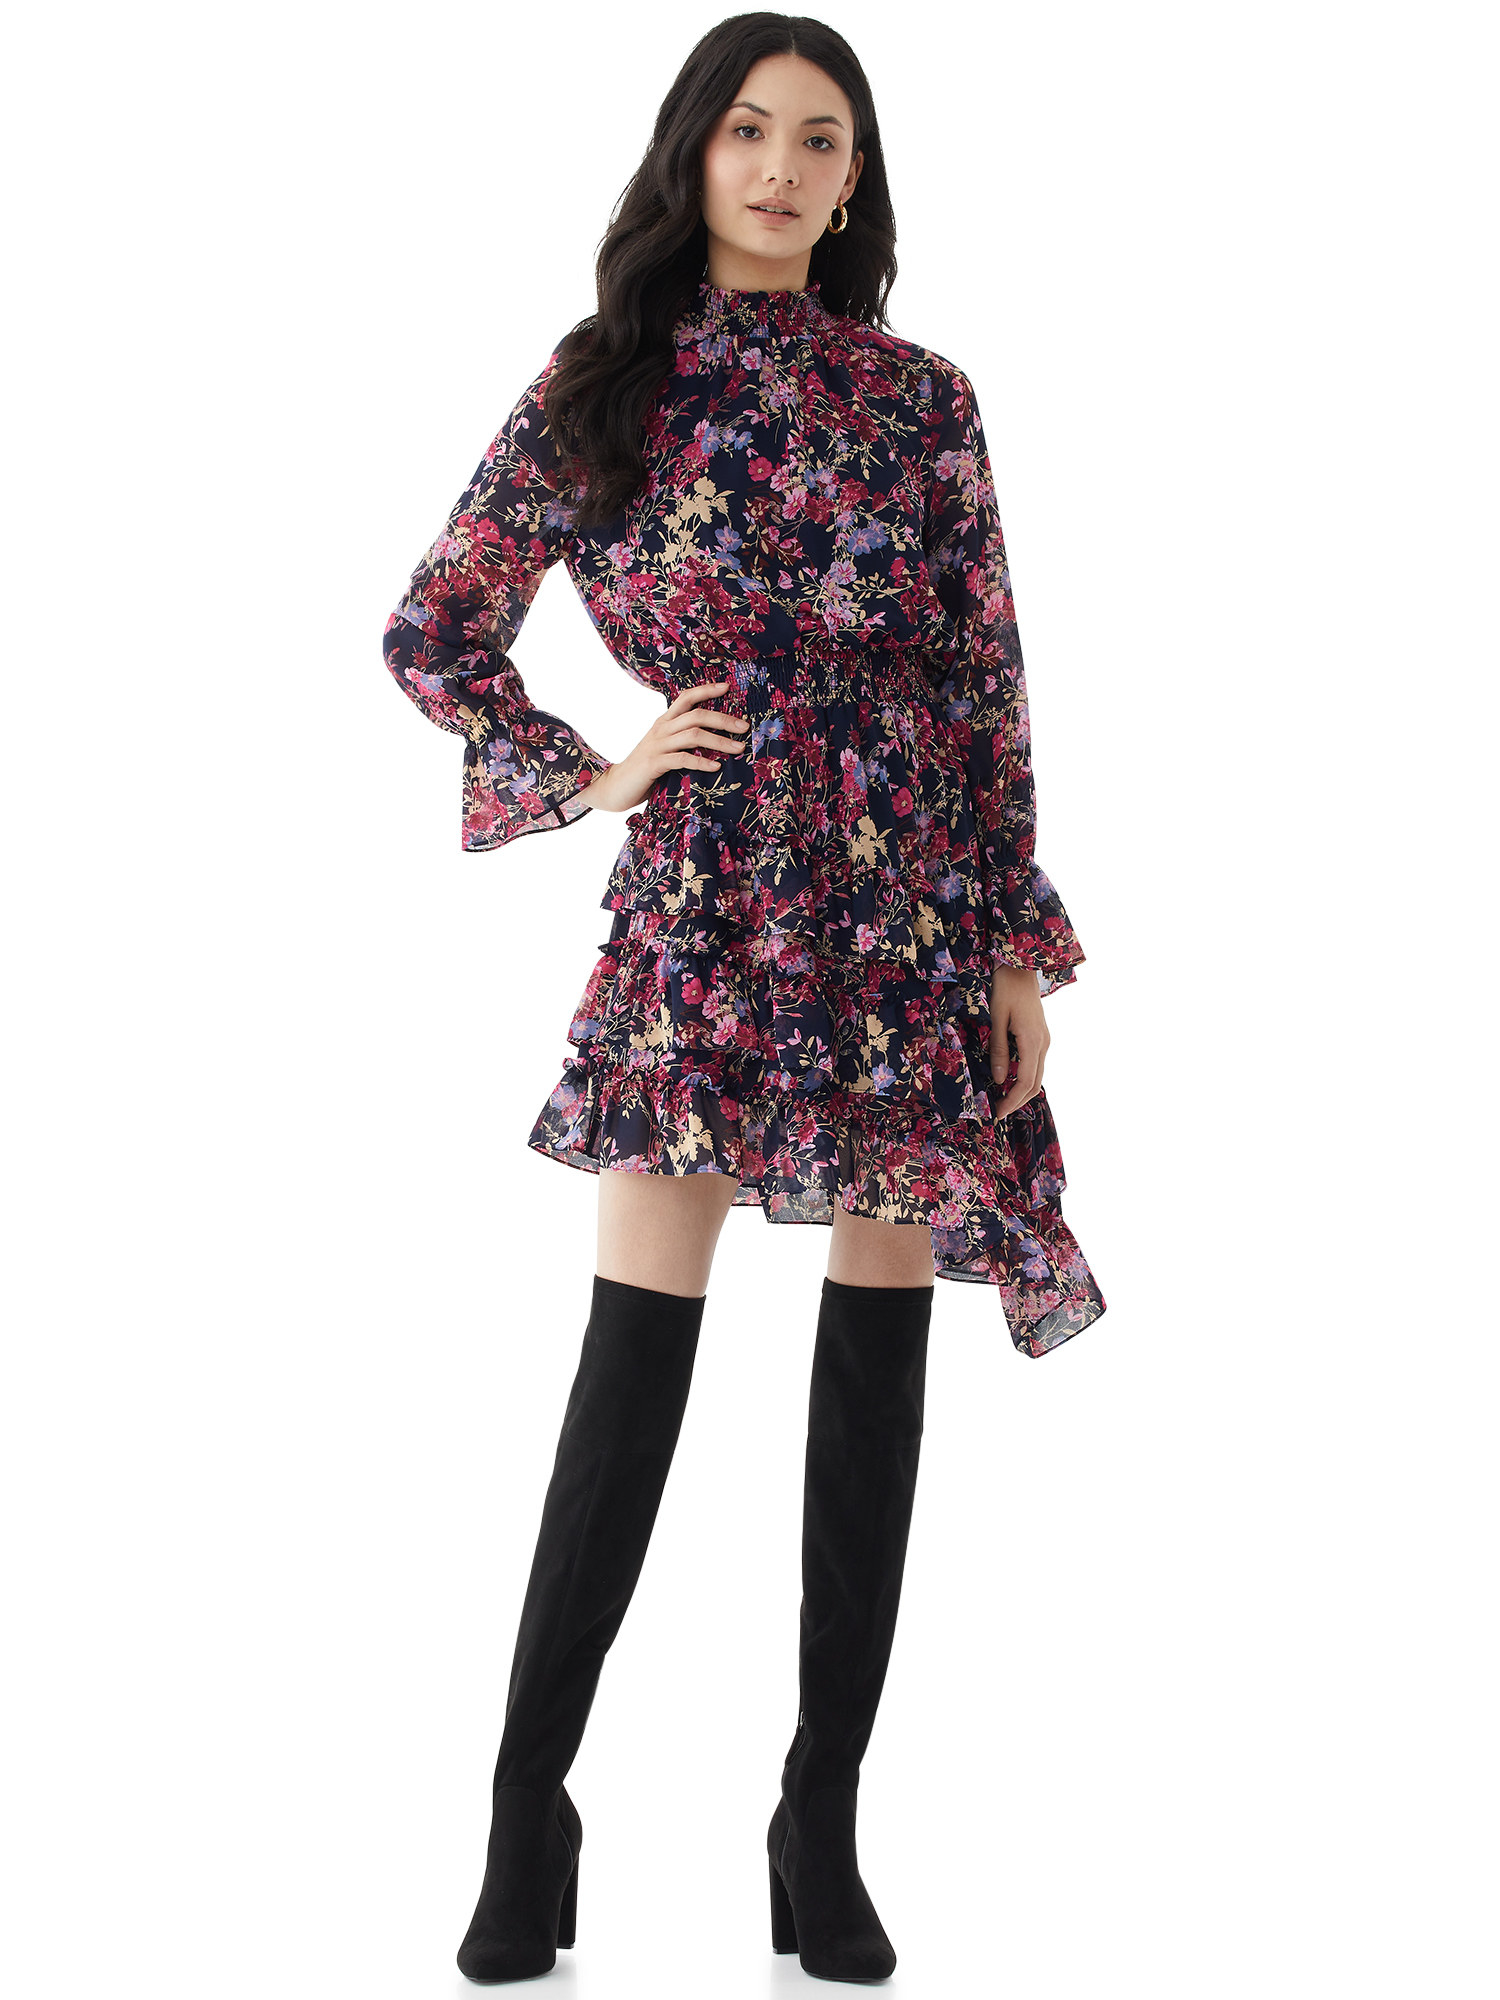 Model wearing floral dress 